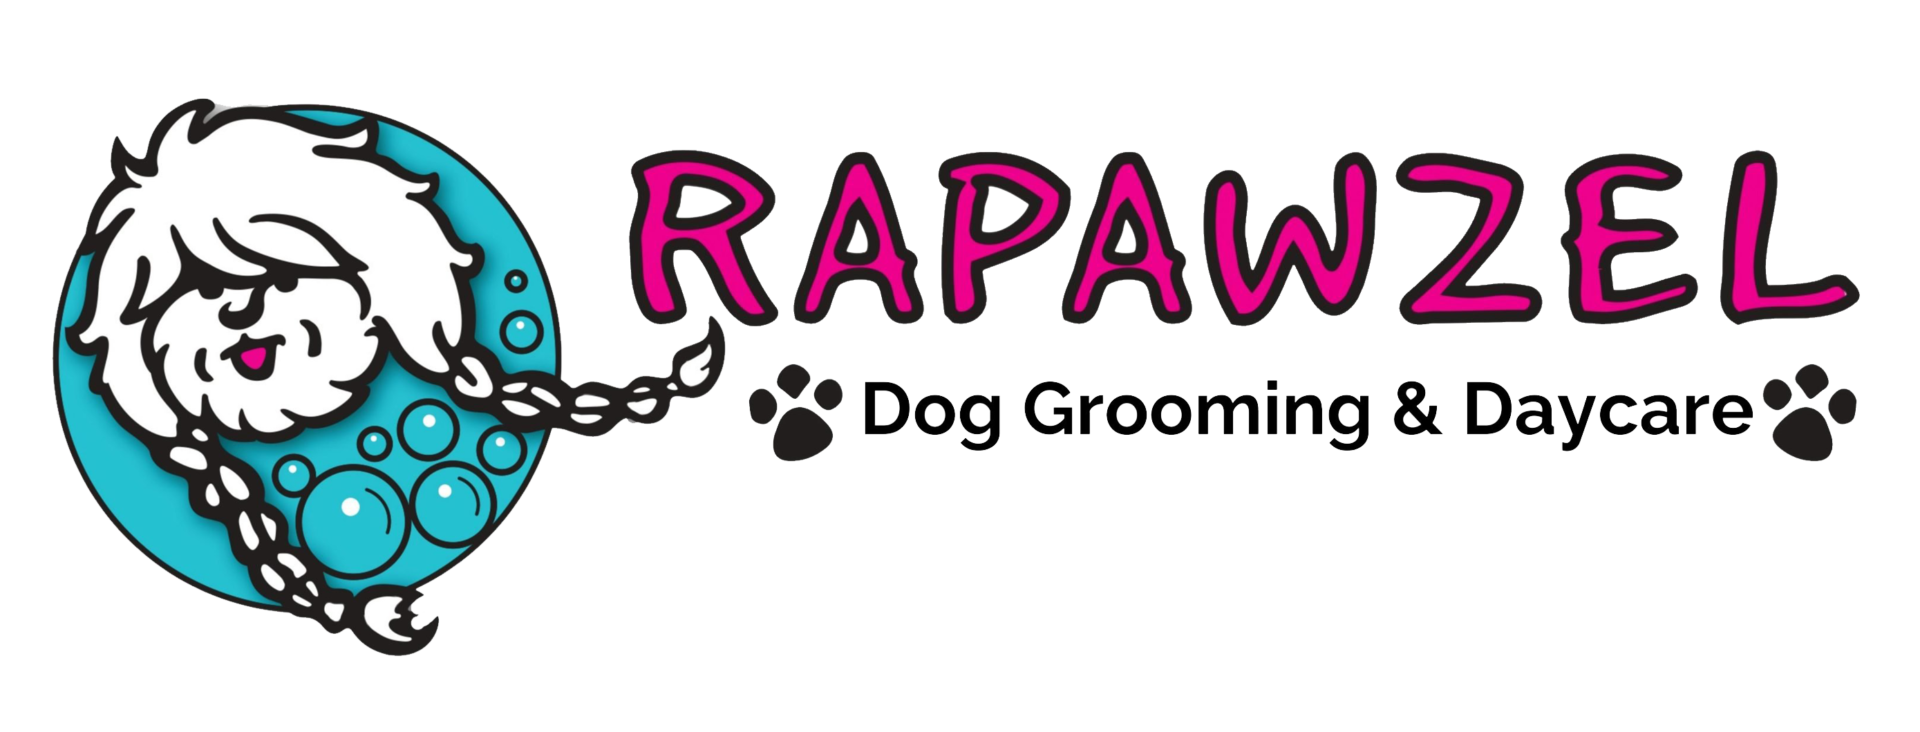 Rapawzel Dog Grooming & Day Care Logo